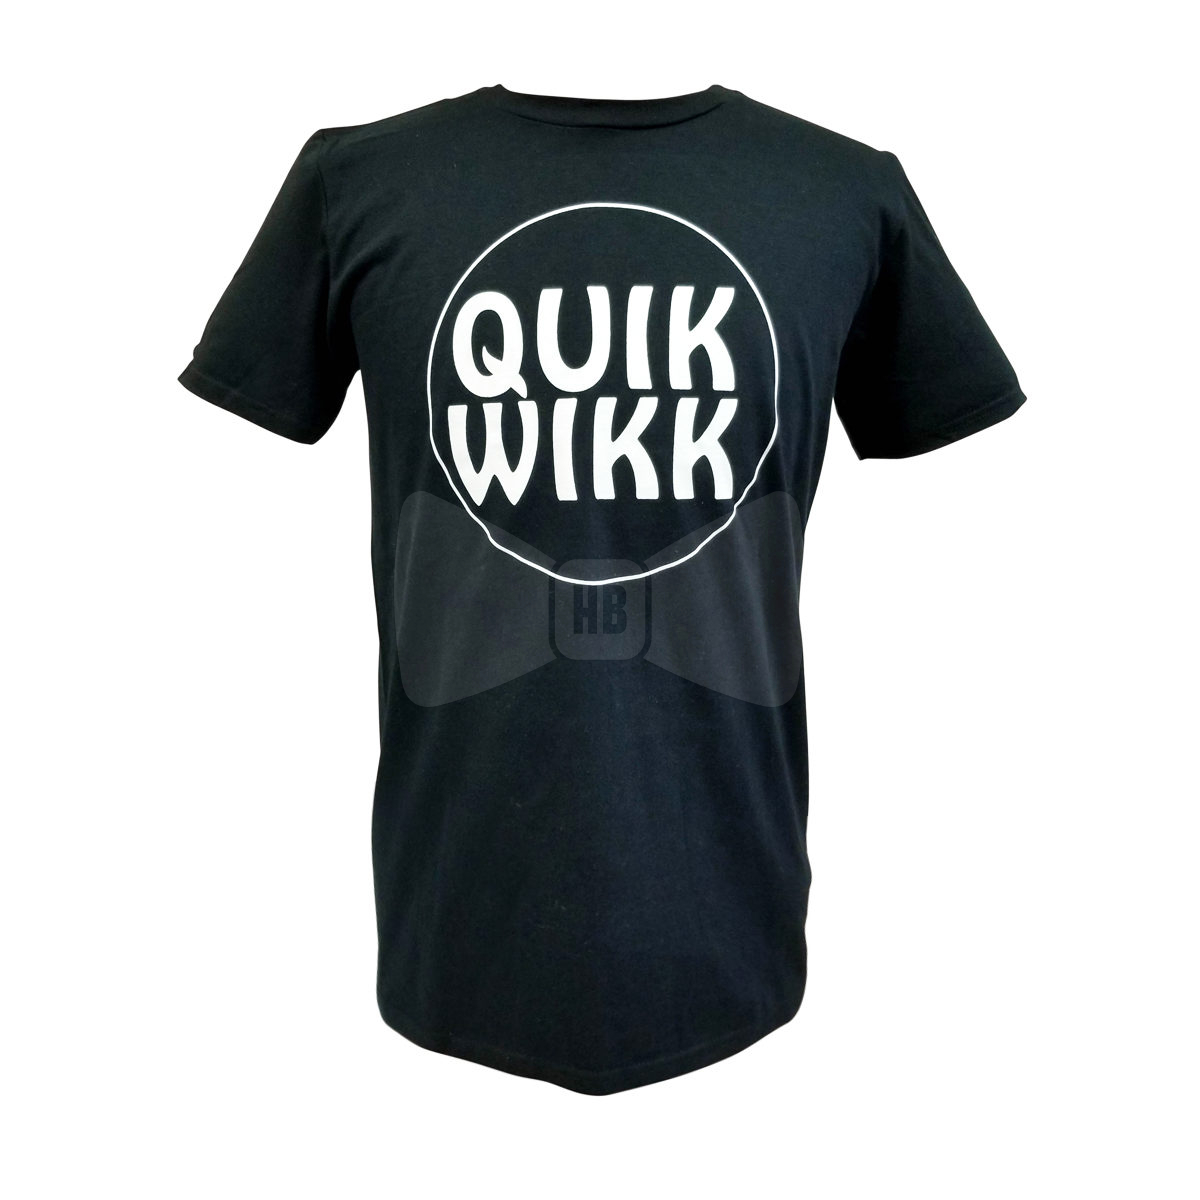 Quik Wikk T-Shirt Small Black